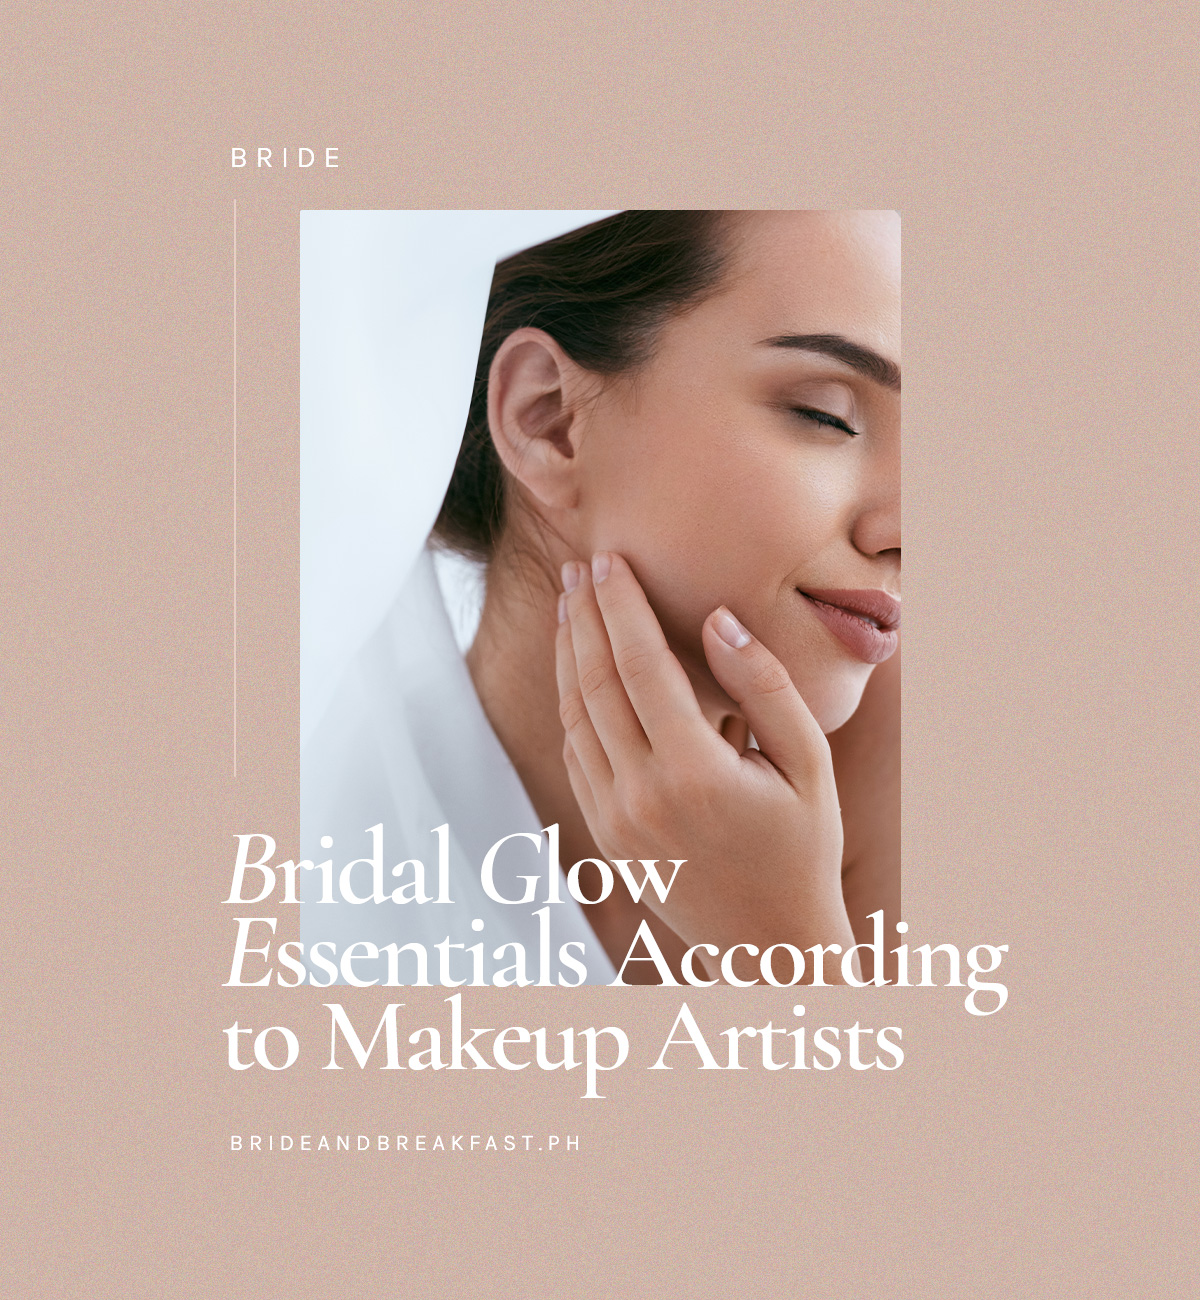 Bridal Glow Essentials According to Makeup Artists